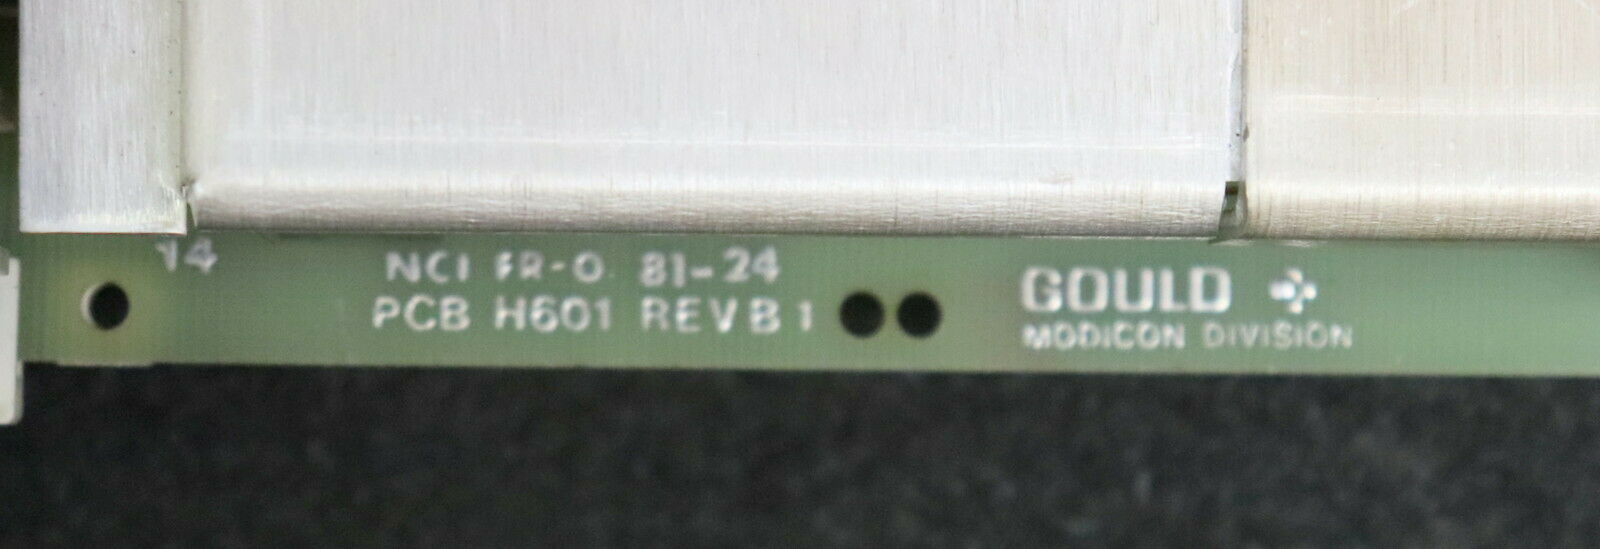 GOULD MODICON Output module B650 115VAC PCB H601 REV B 1  NCI FR-O  81-24